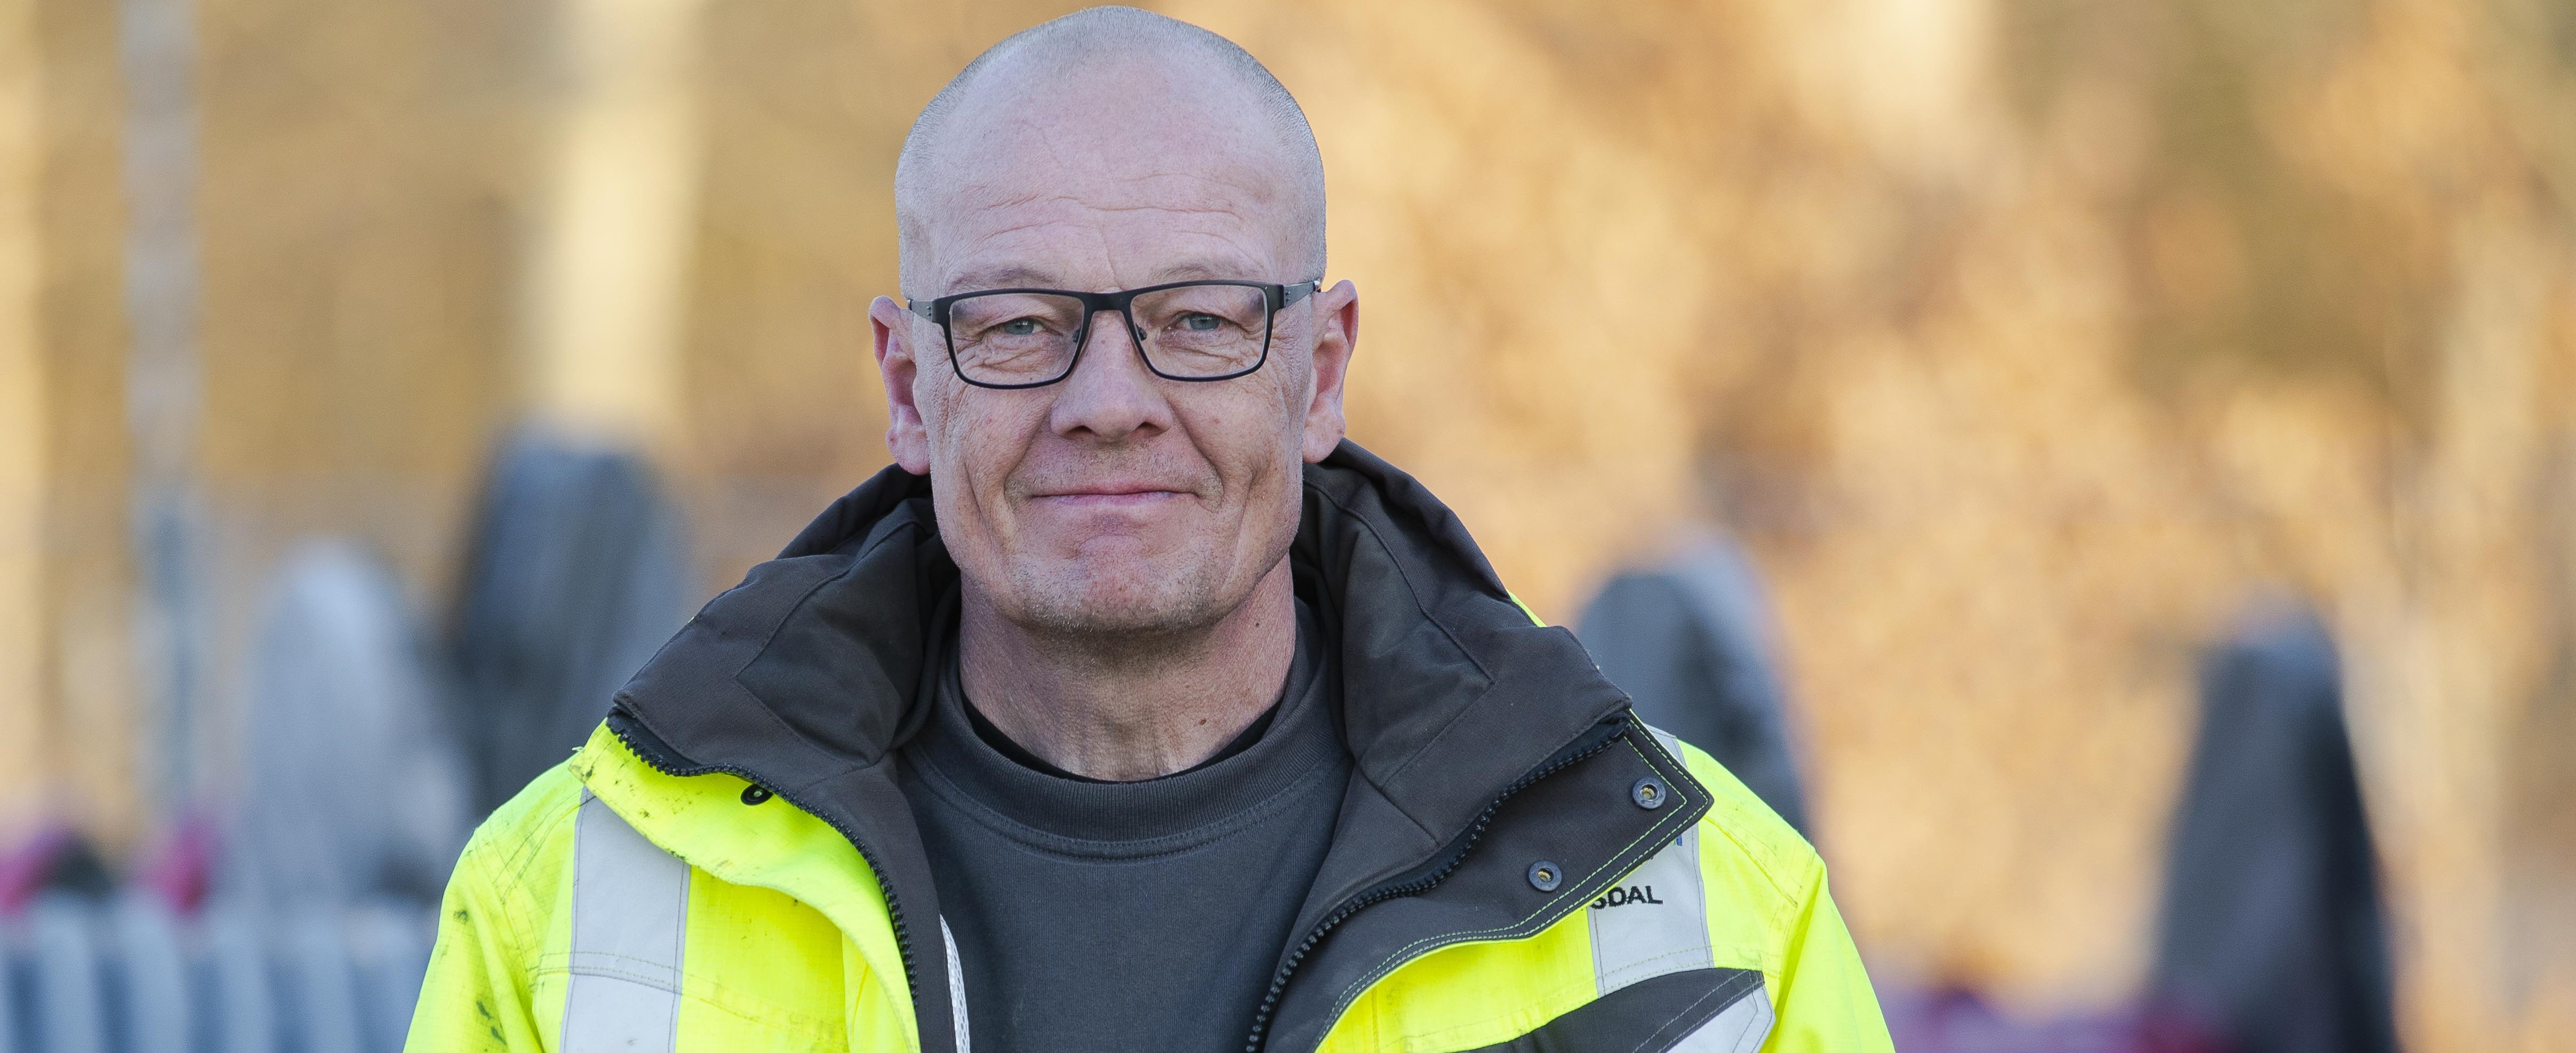 Medarbejder Energi Ikast - Lars Lysdal